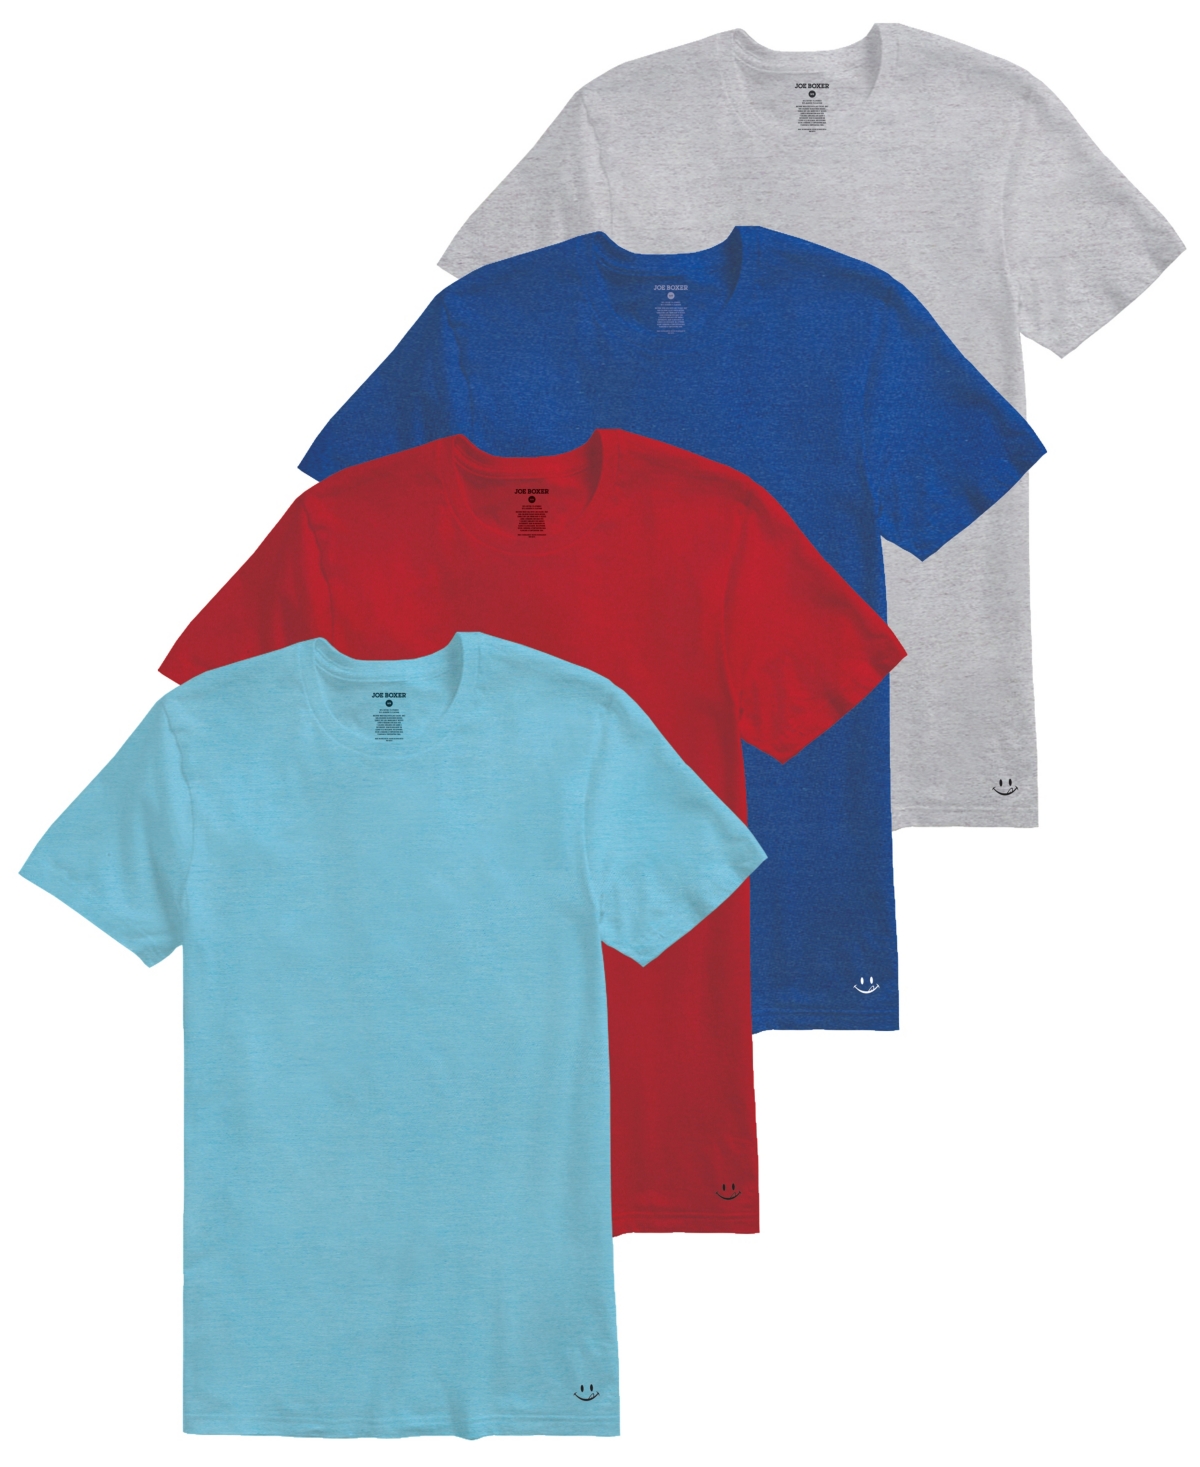 Men's Crew Neck T-shirt, Pack of 4 - Blue